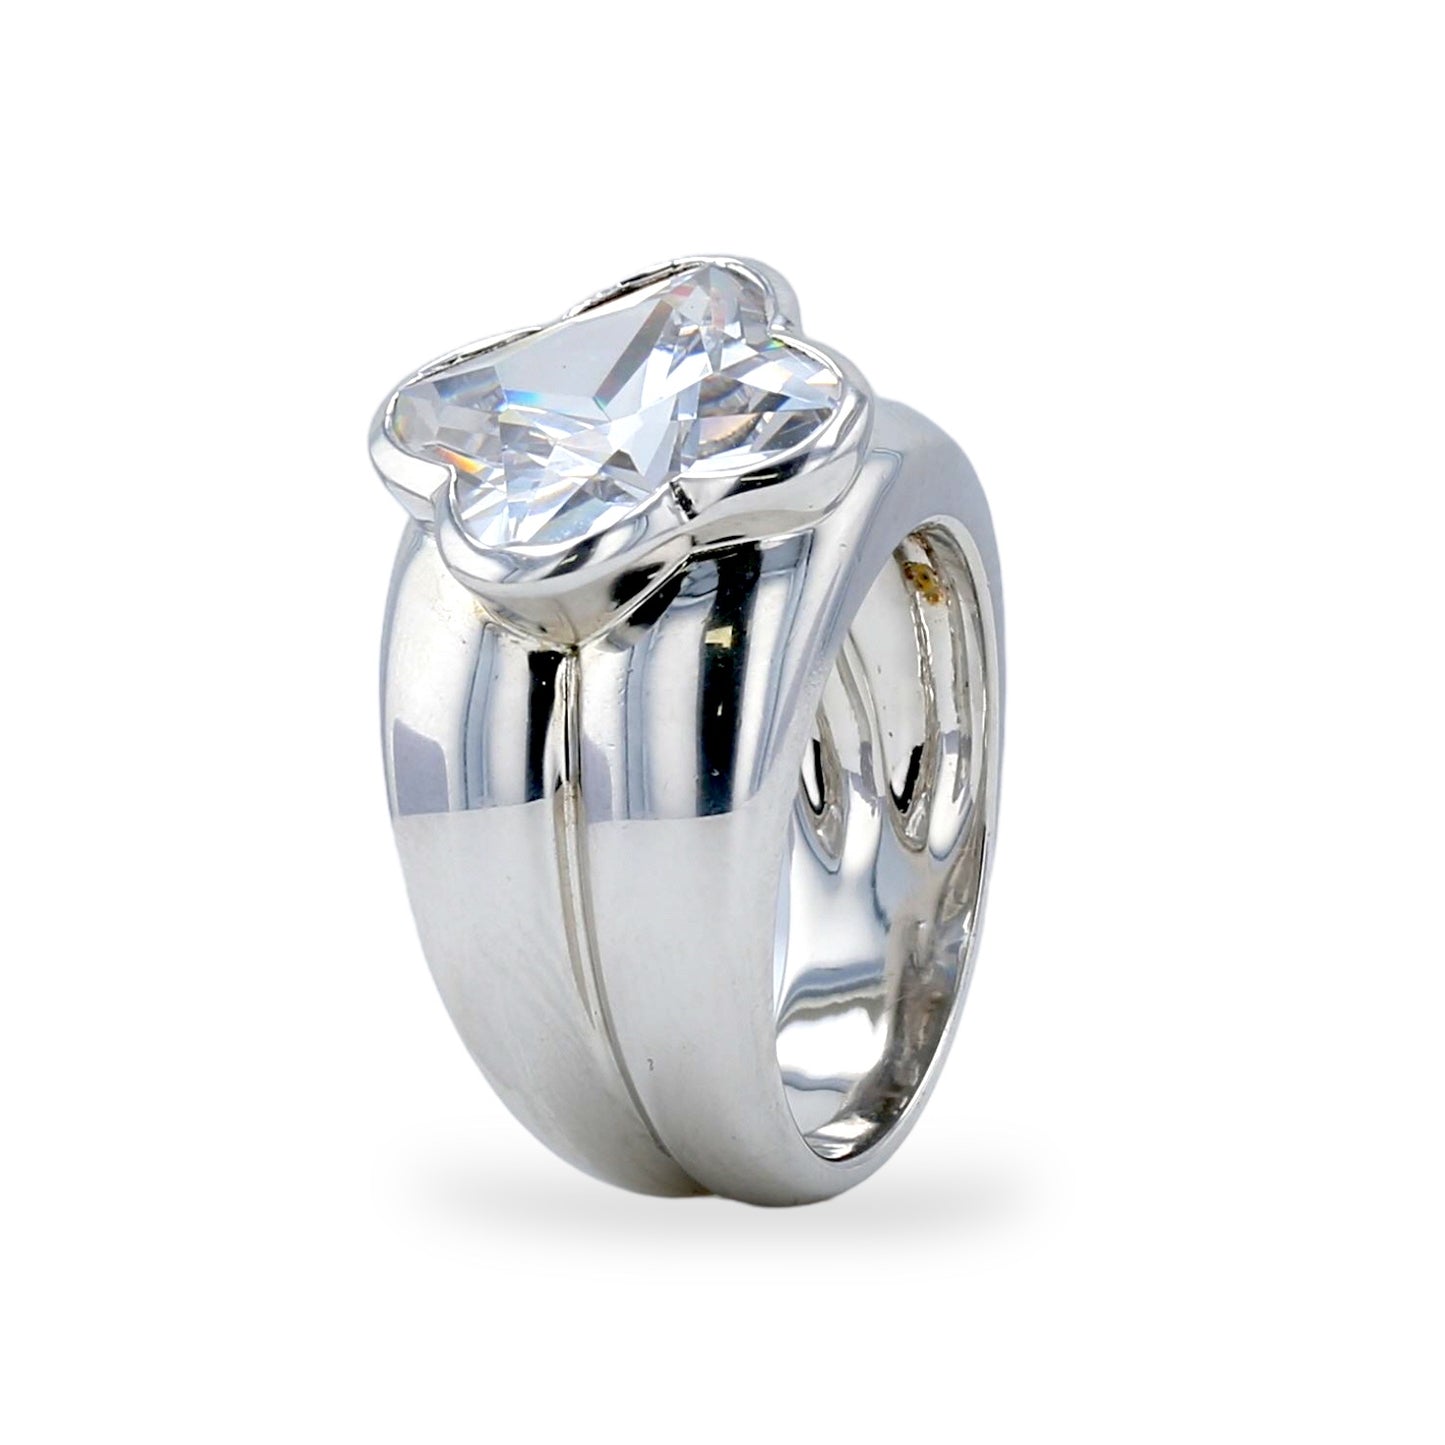 Sterling silver 925 white zirconium Clover ring